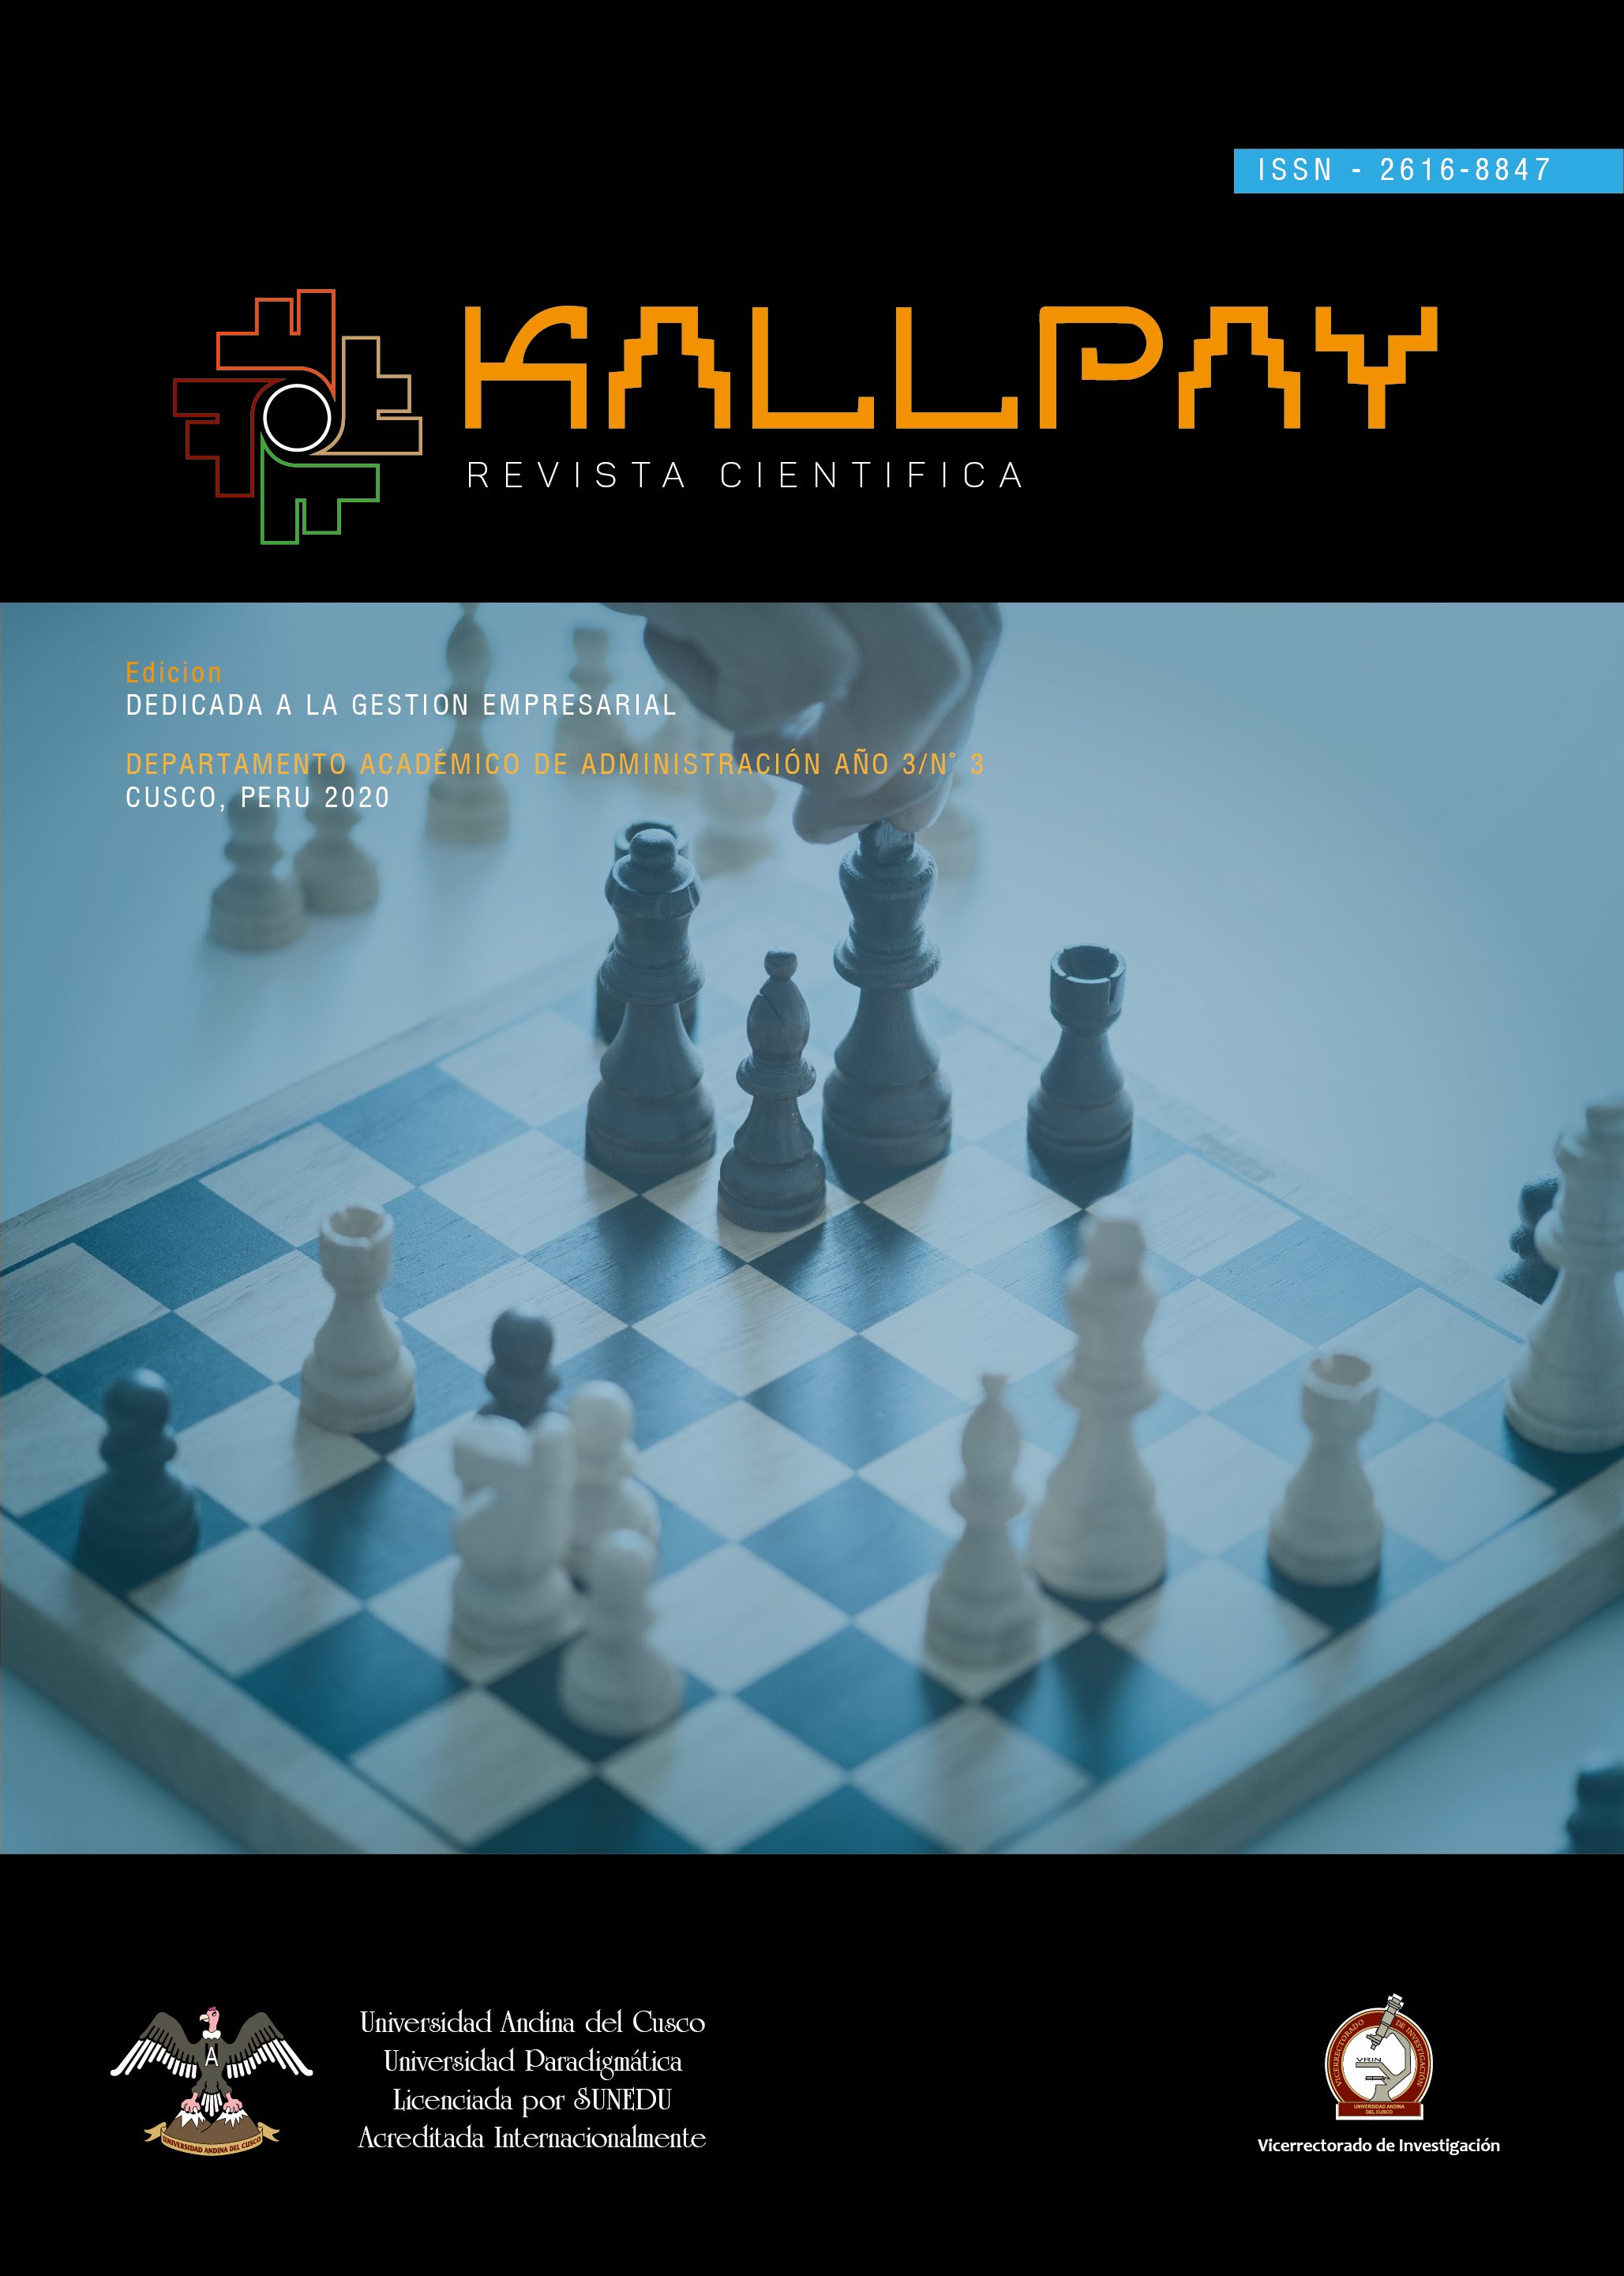 					View No. 3 (2020): Kallpay - "Gestión empresarial"
				